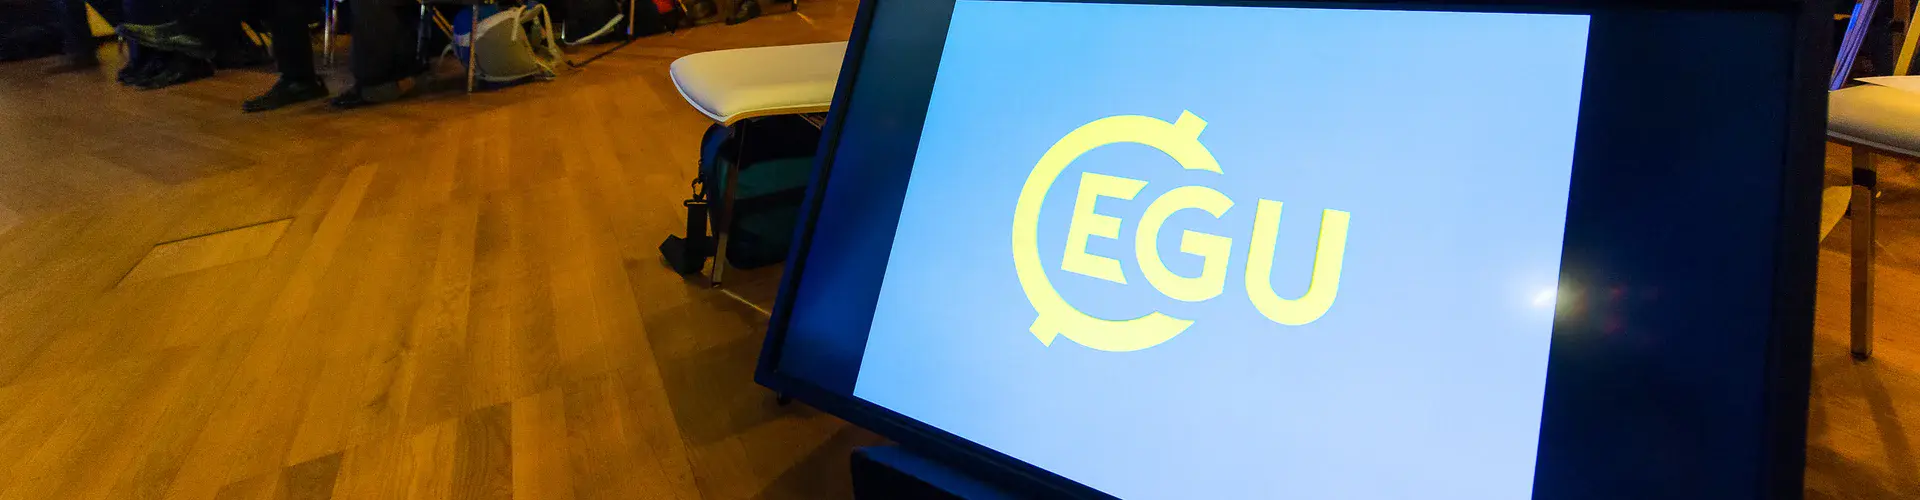 EGU Award Ceremony at the EGU 2016 General Assembly (Credit: EGU/Foto Pfluegl)